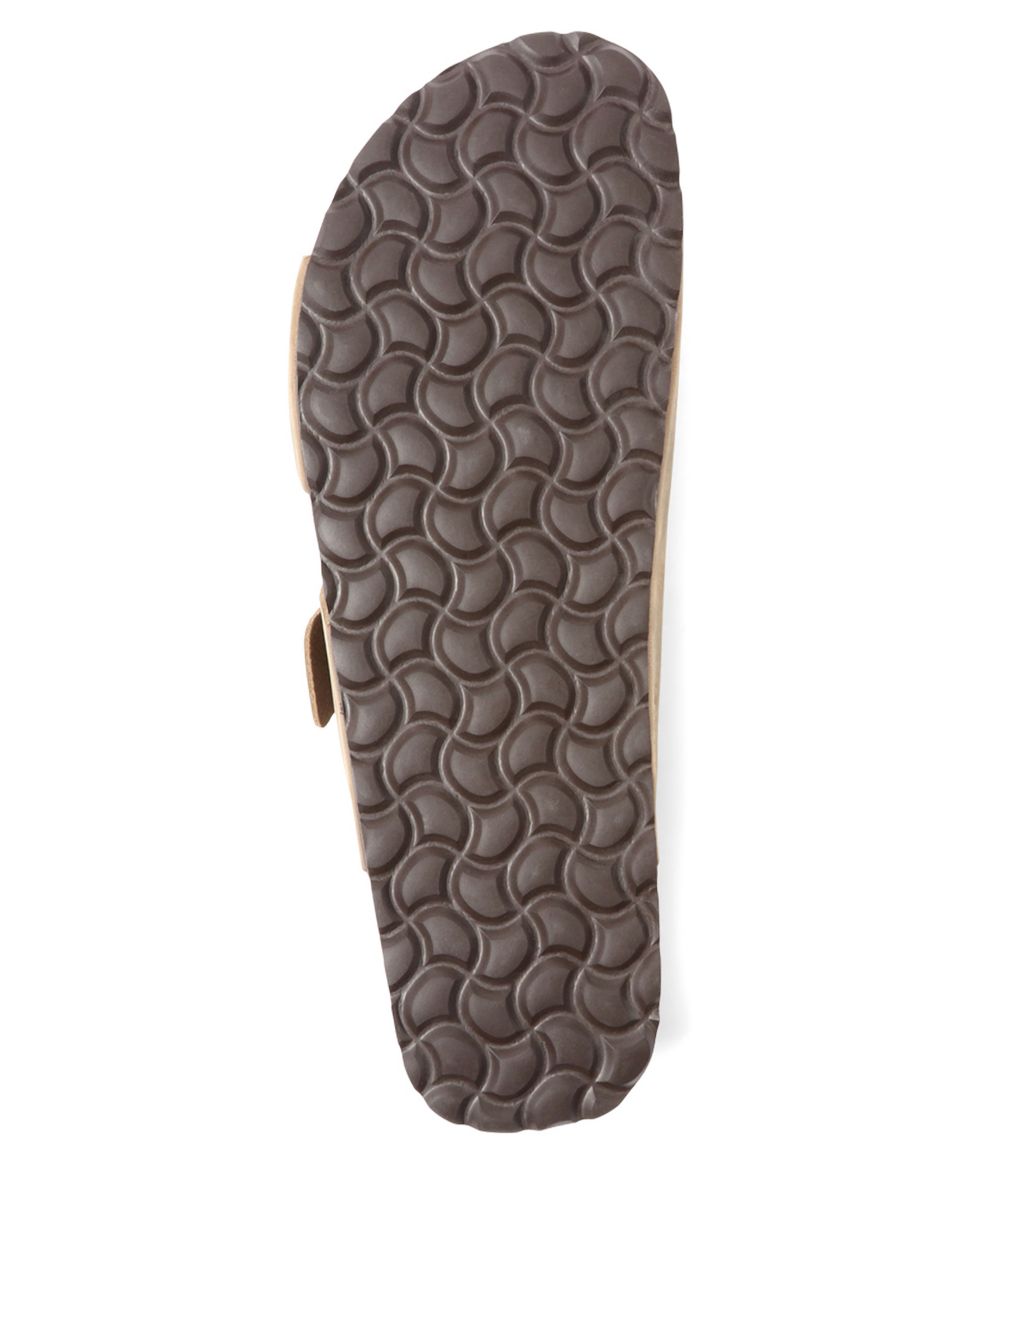 Leather Slip-On Sandals image 4